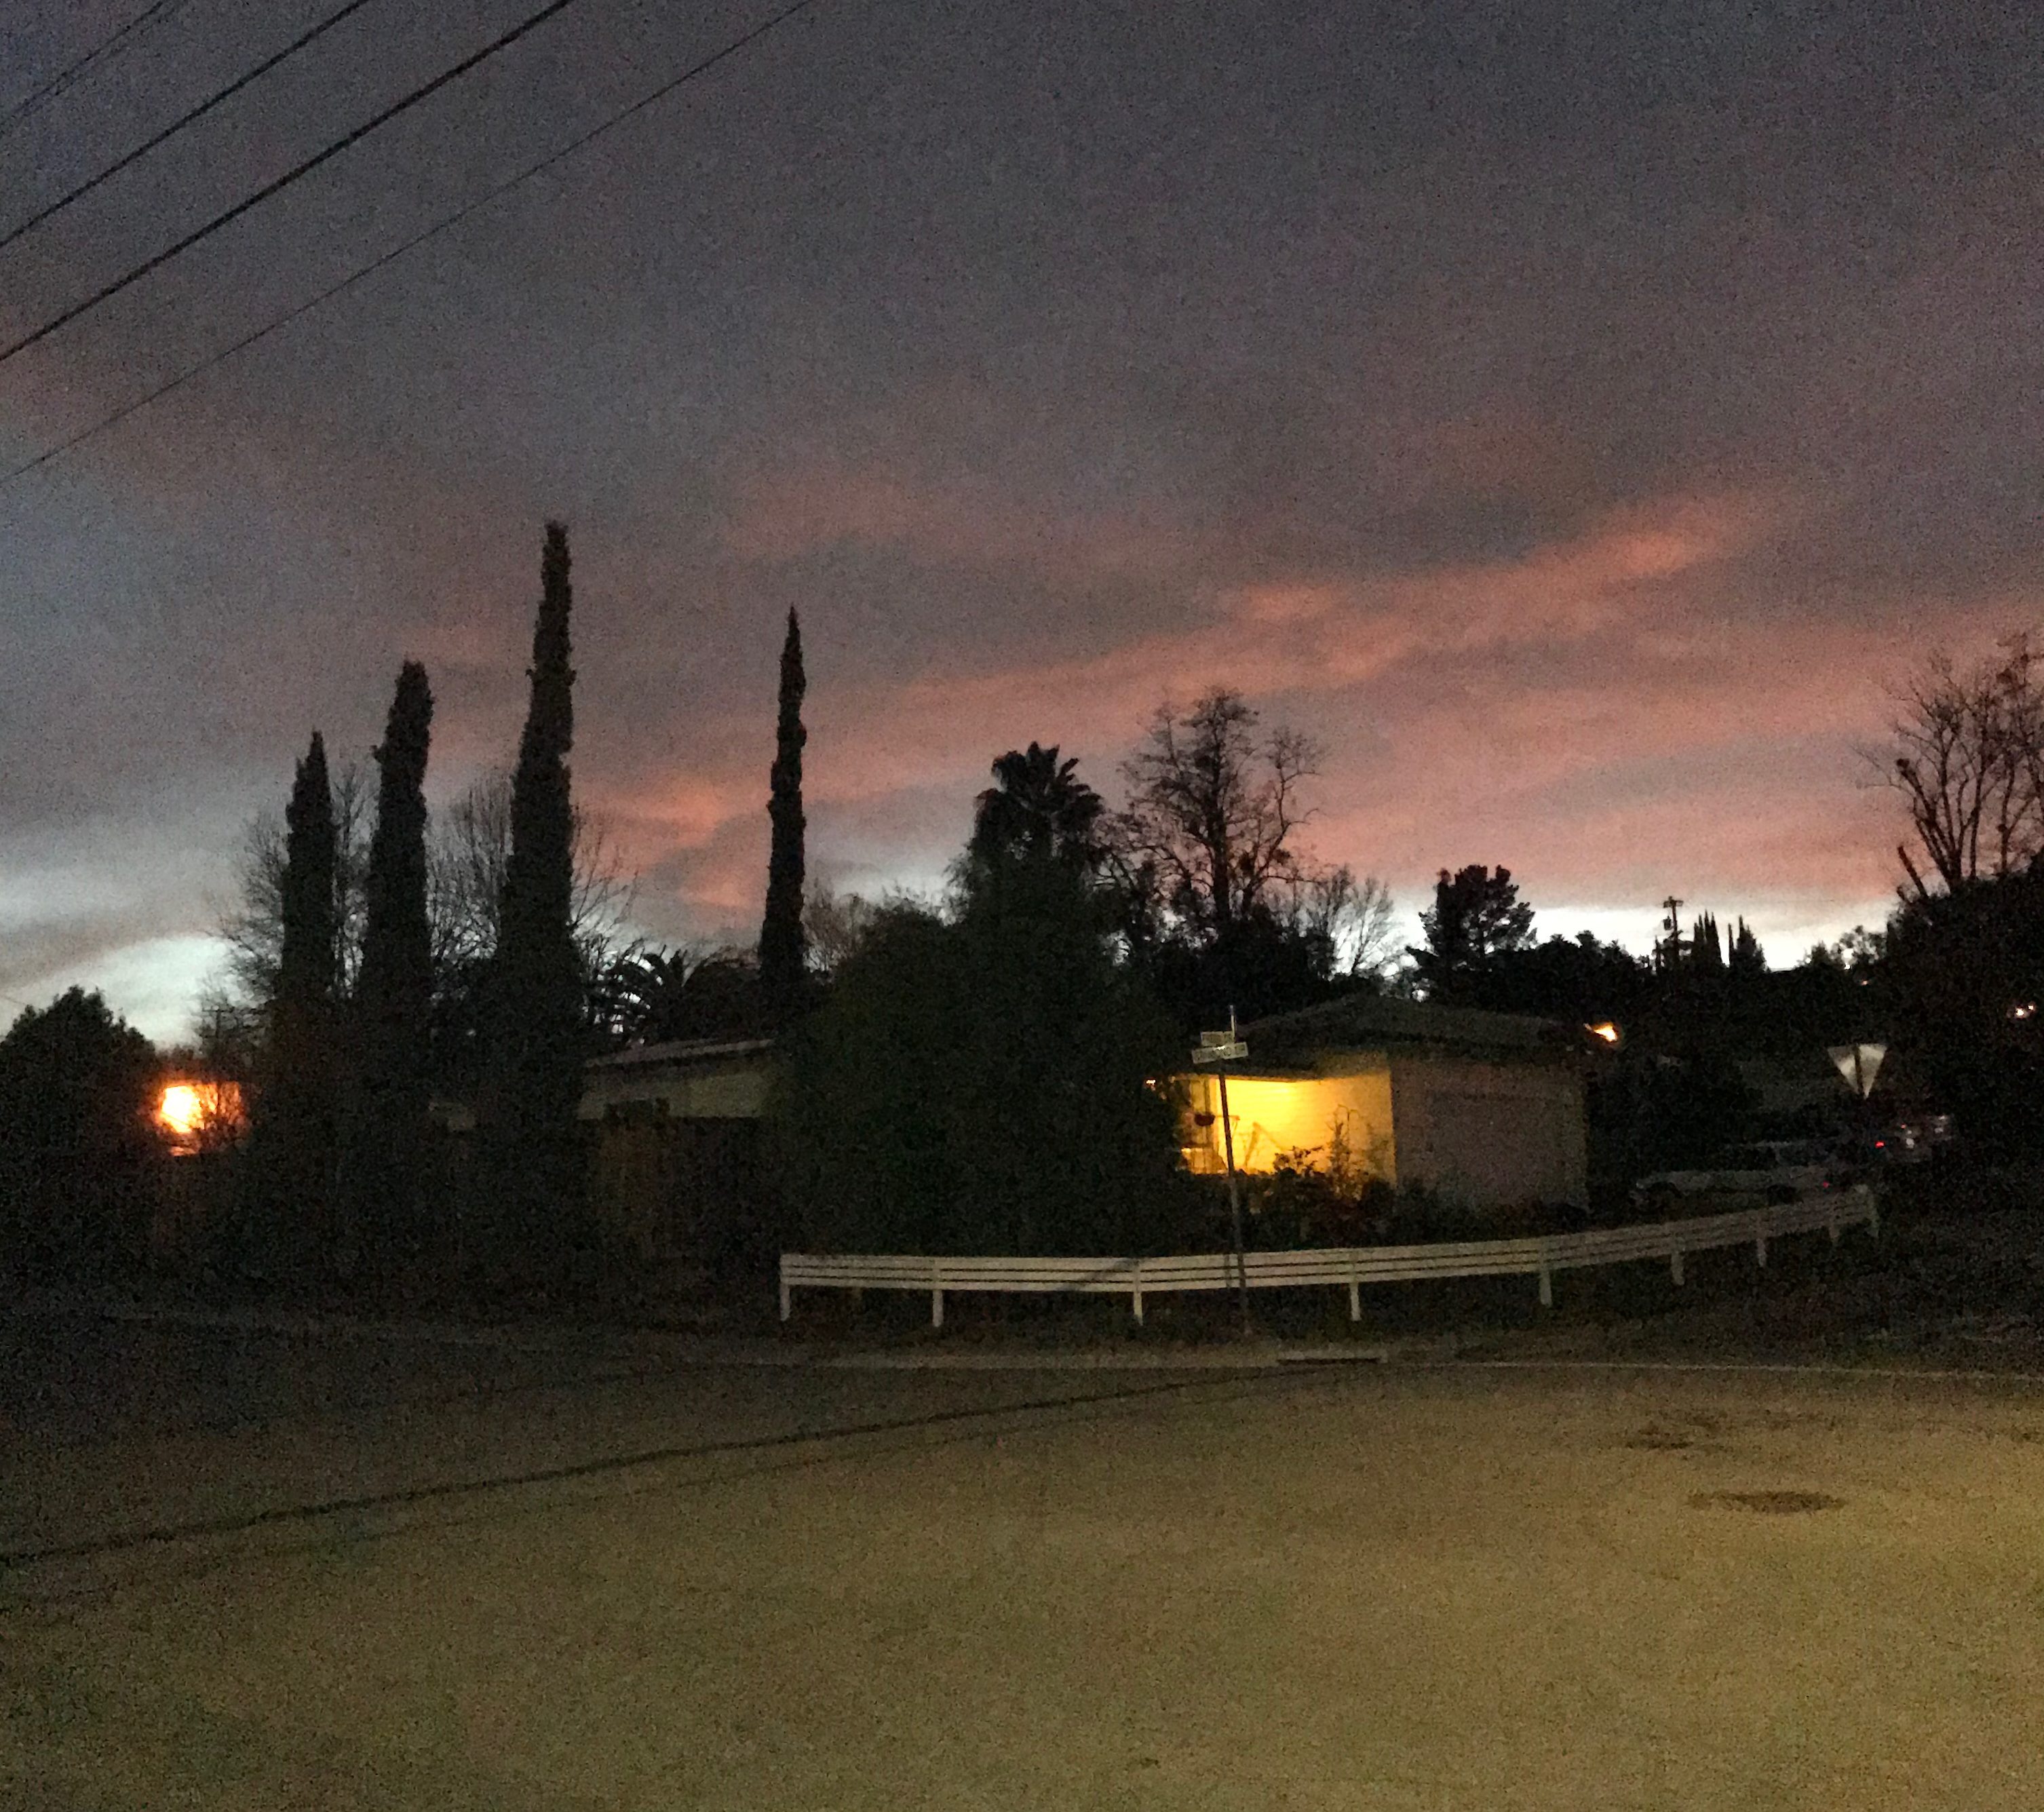 Electric porch light at dusk